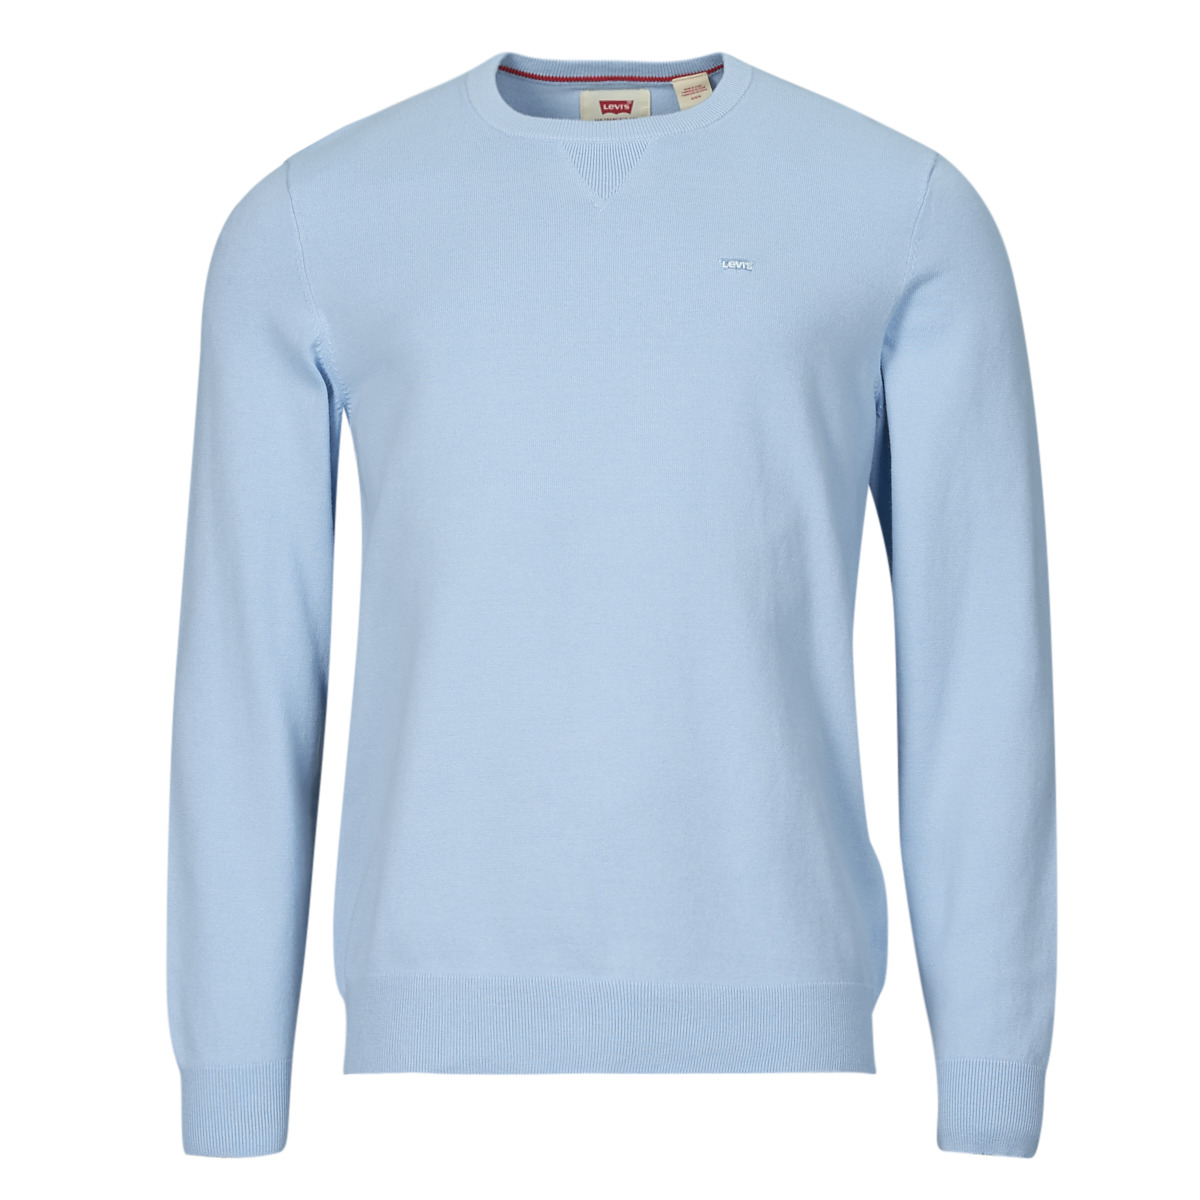 levis  lightweight hm sweater  men's sweatshirt in blue